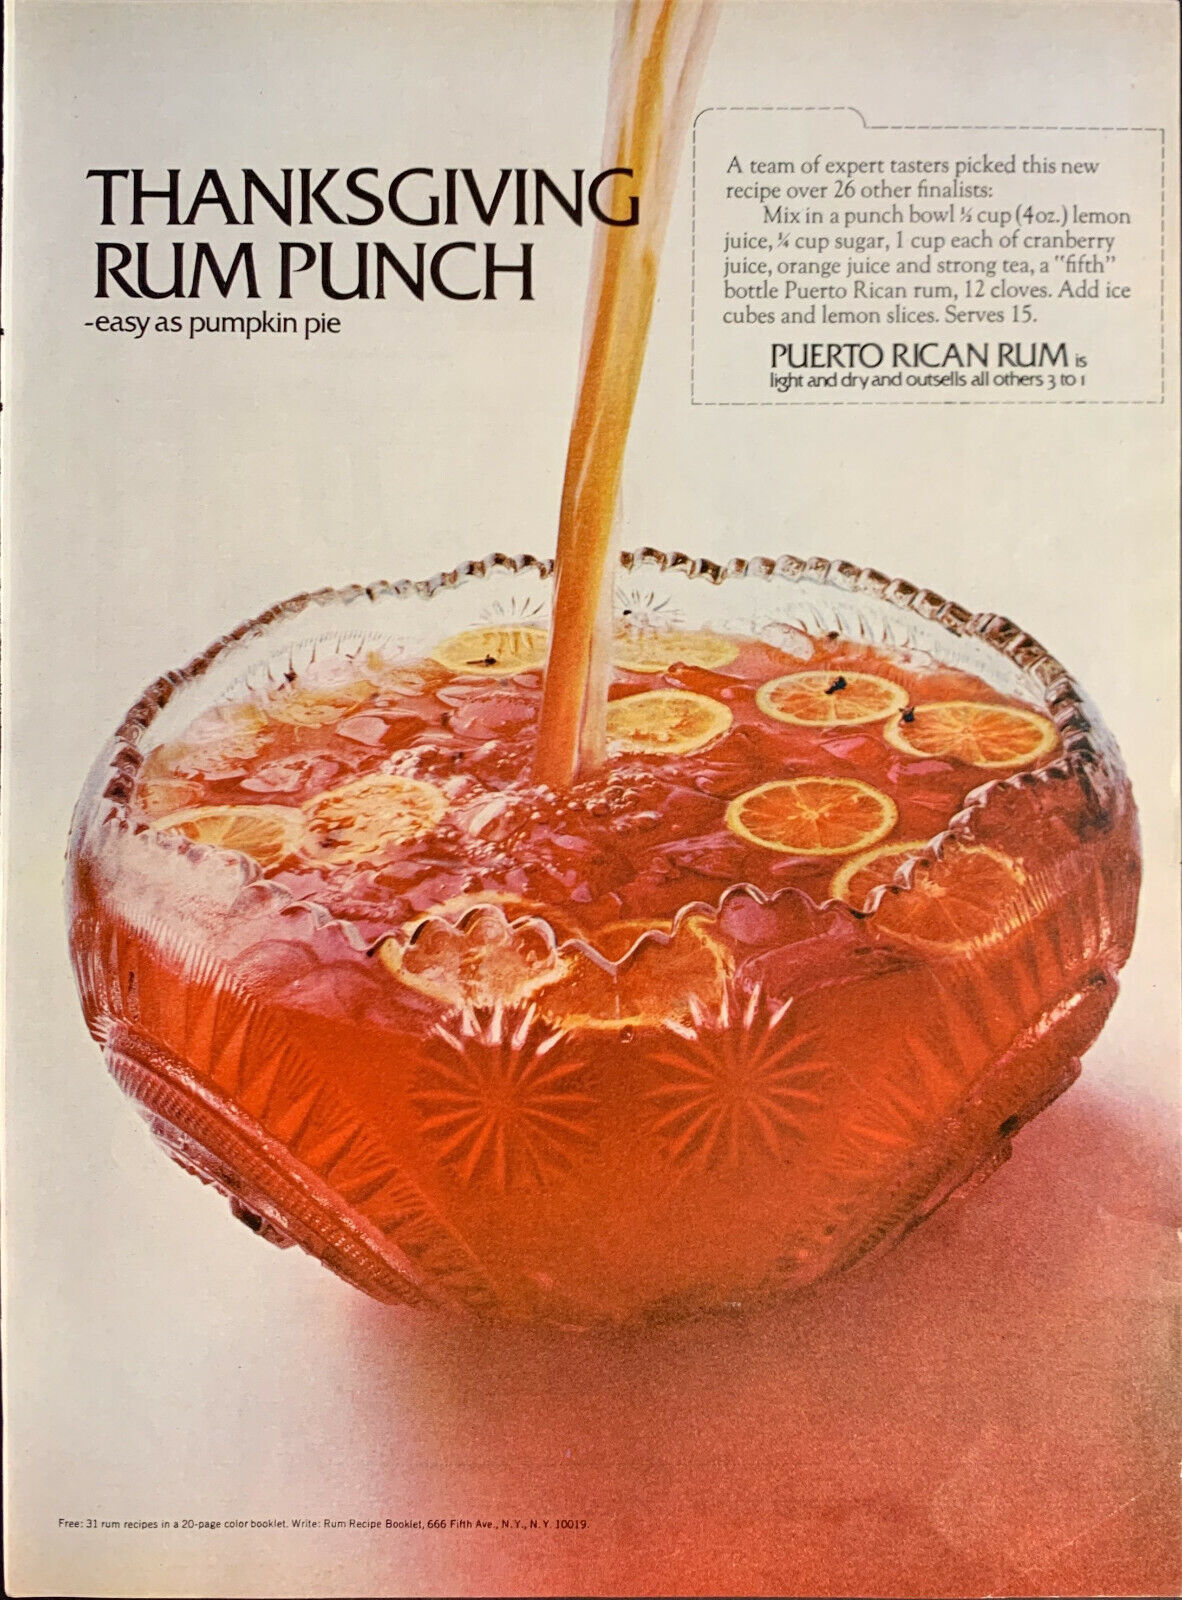 Vintage 1968 Puerto Rican Rum Thanksgiving Rum Punch Recipe Advertisement